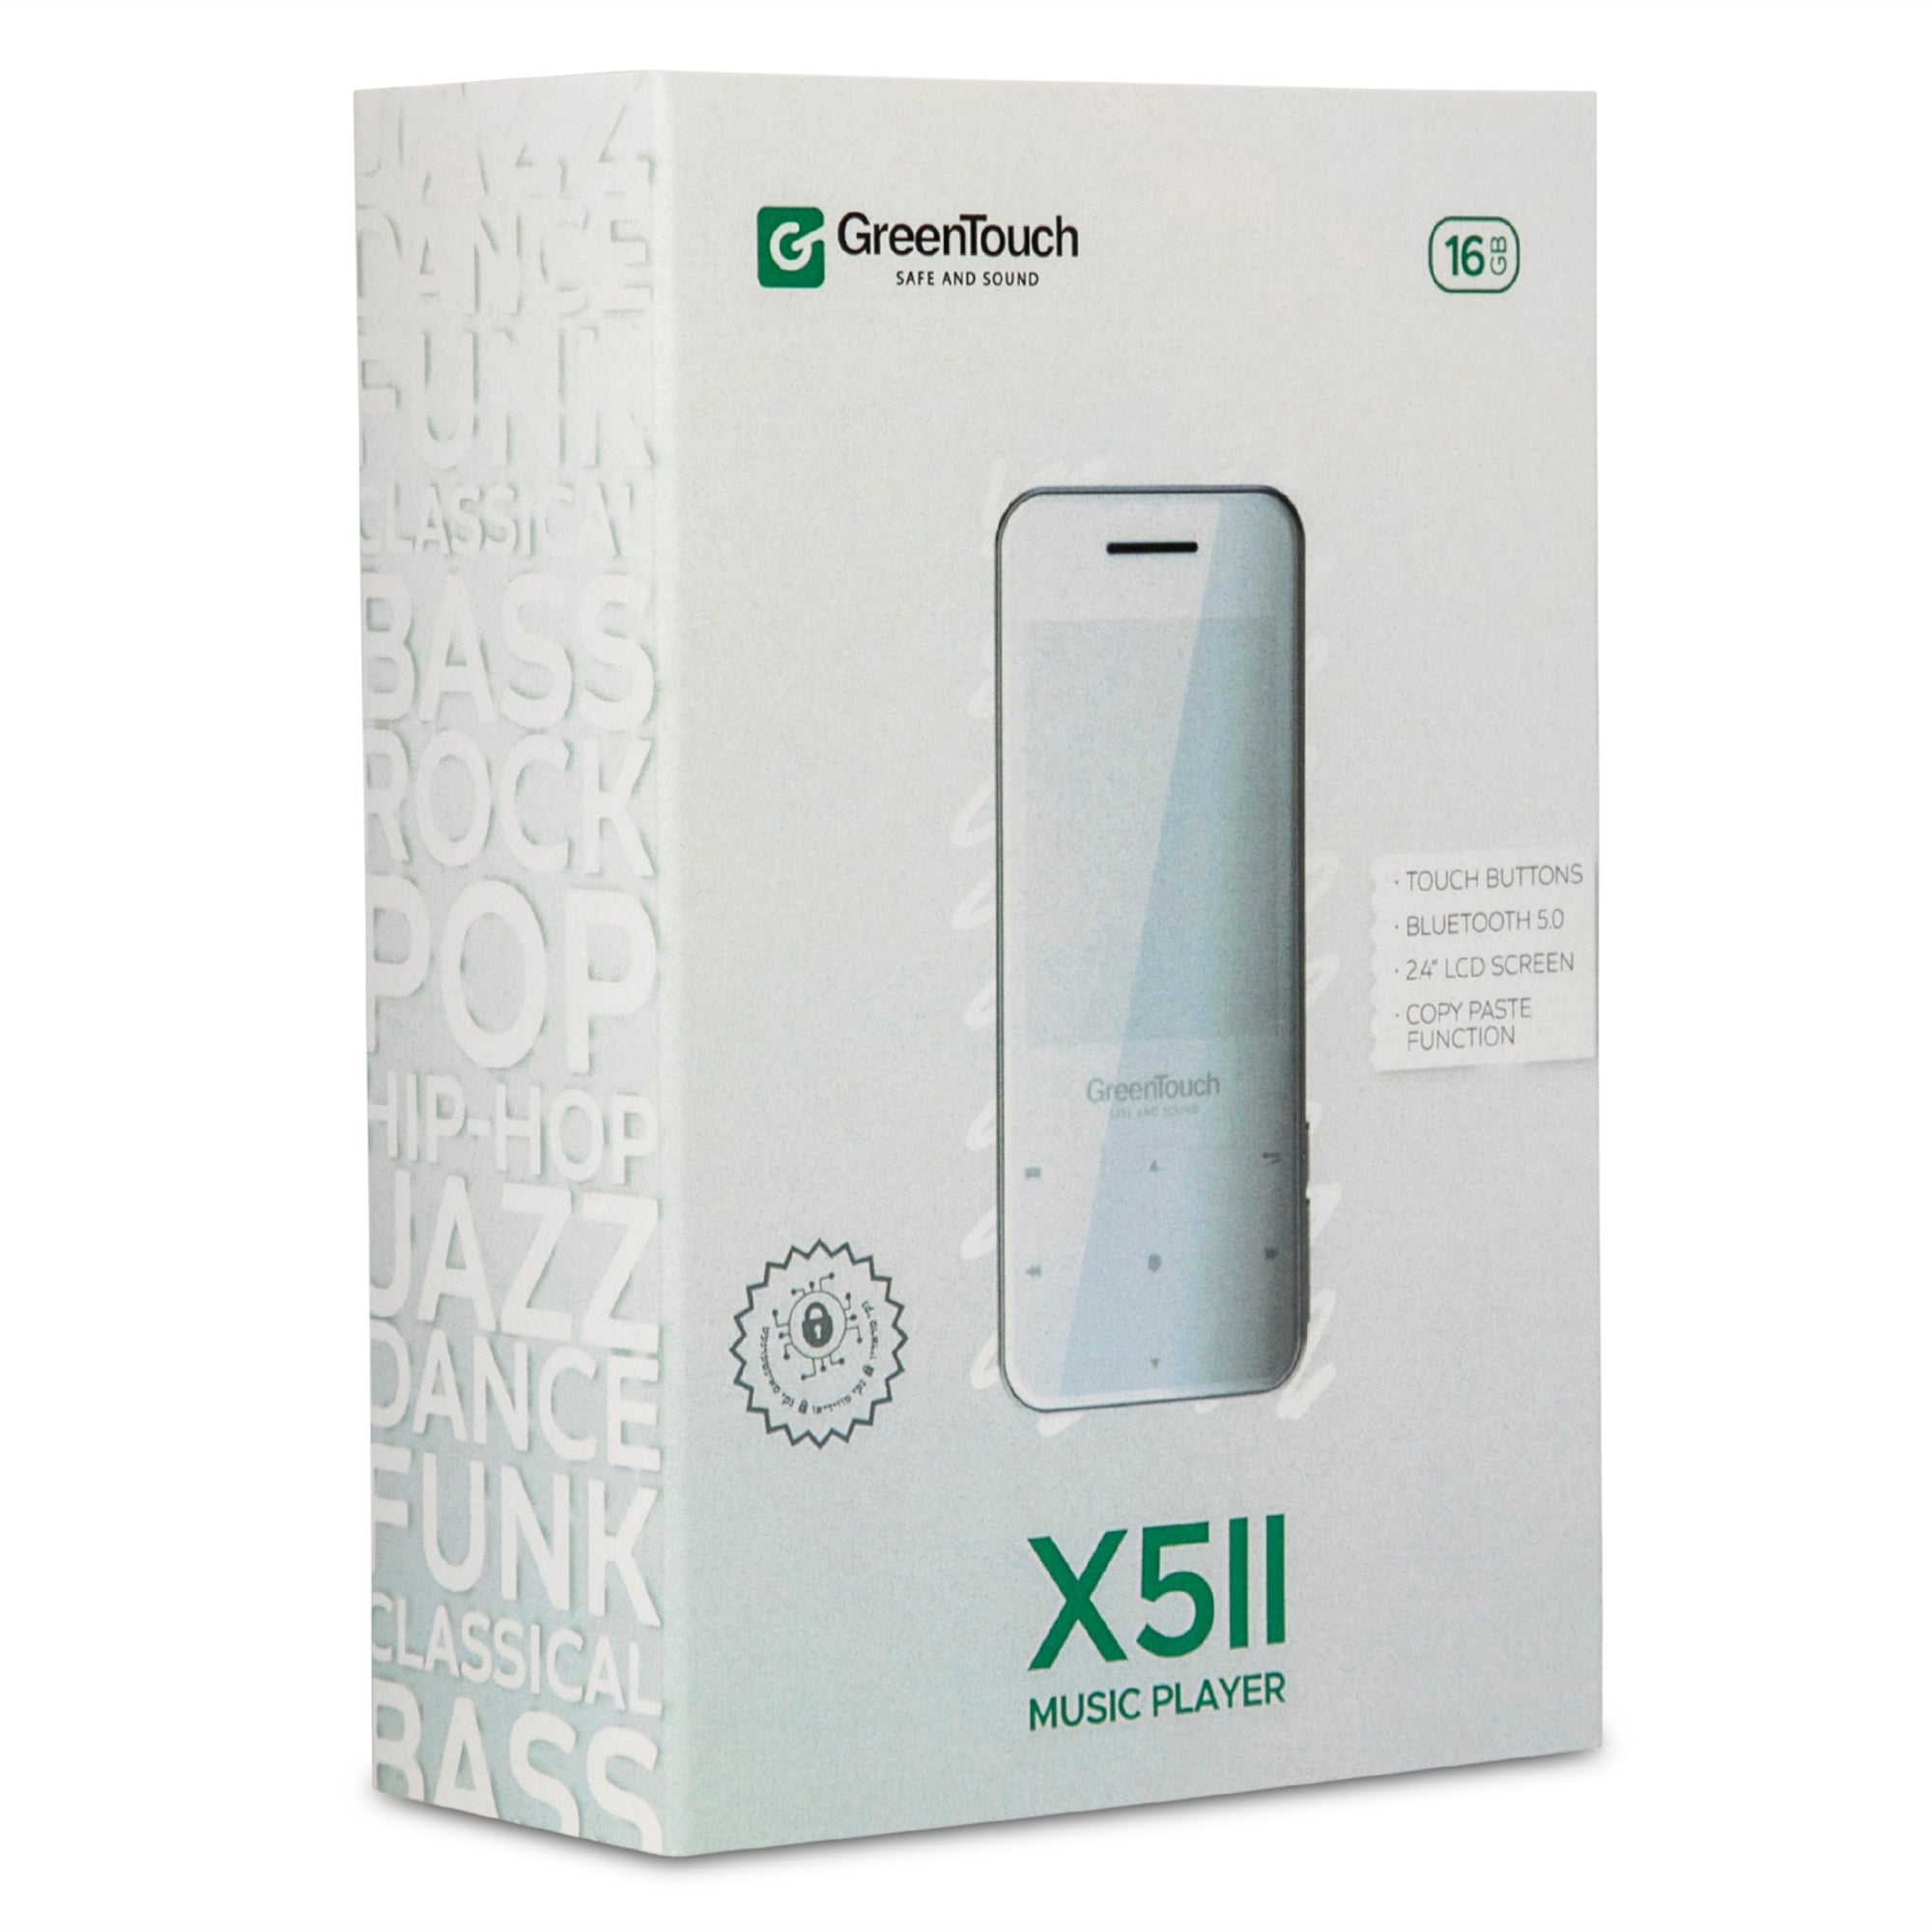 Greentouch - X5II 16GB White MP3 Player